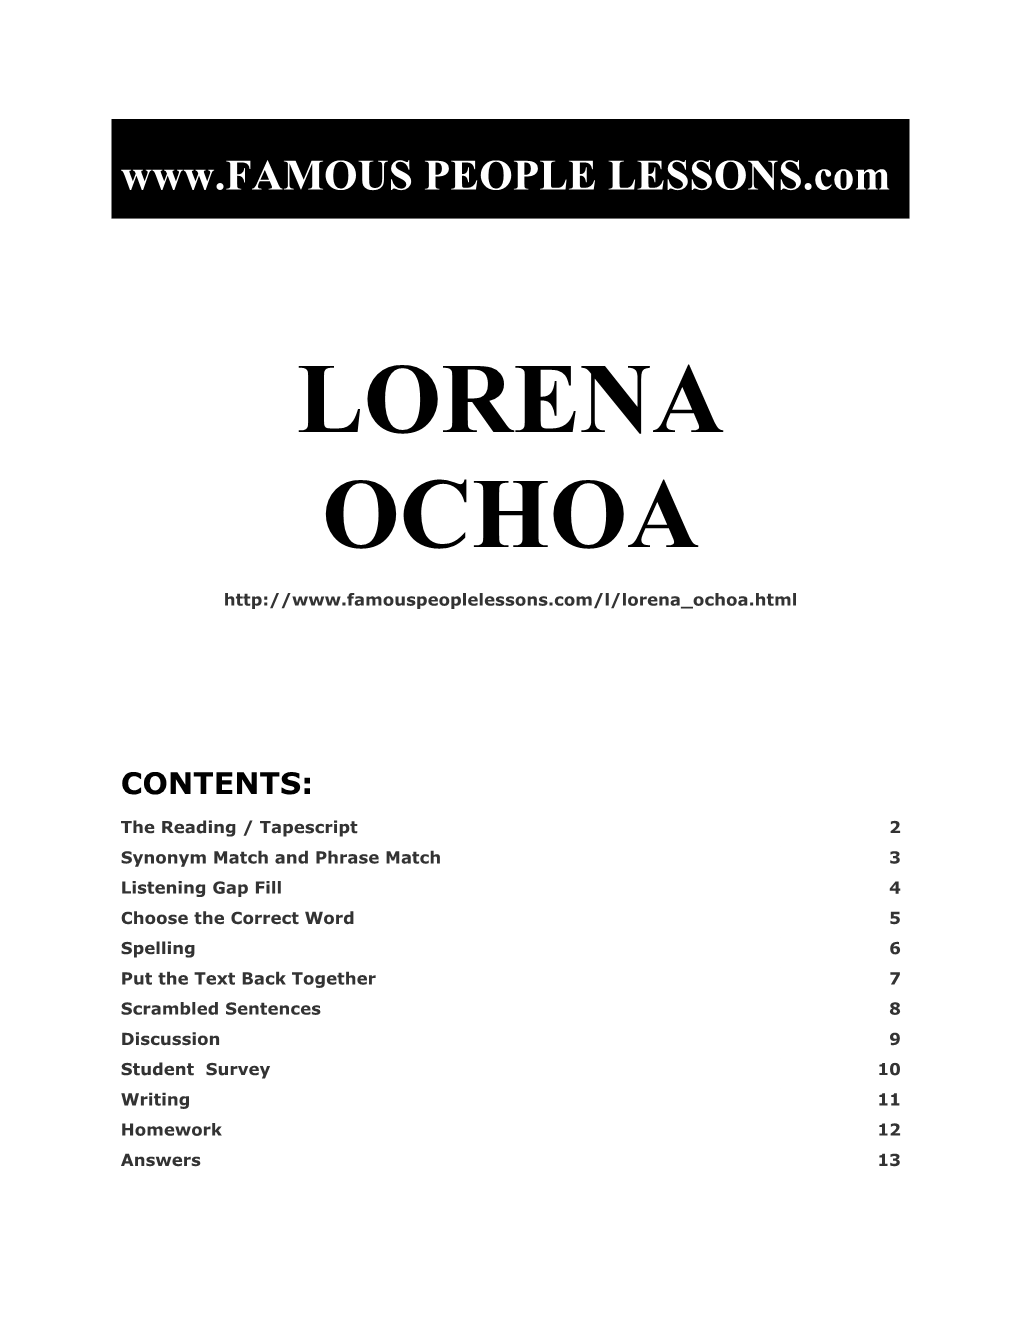 Famous People Lessons - Lorena Ochoa s1